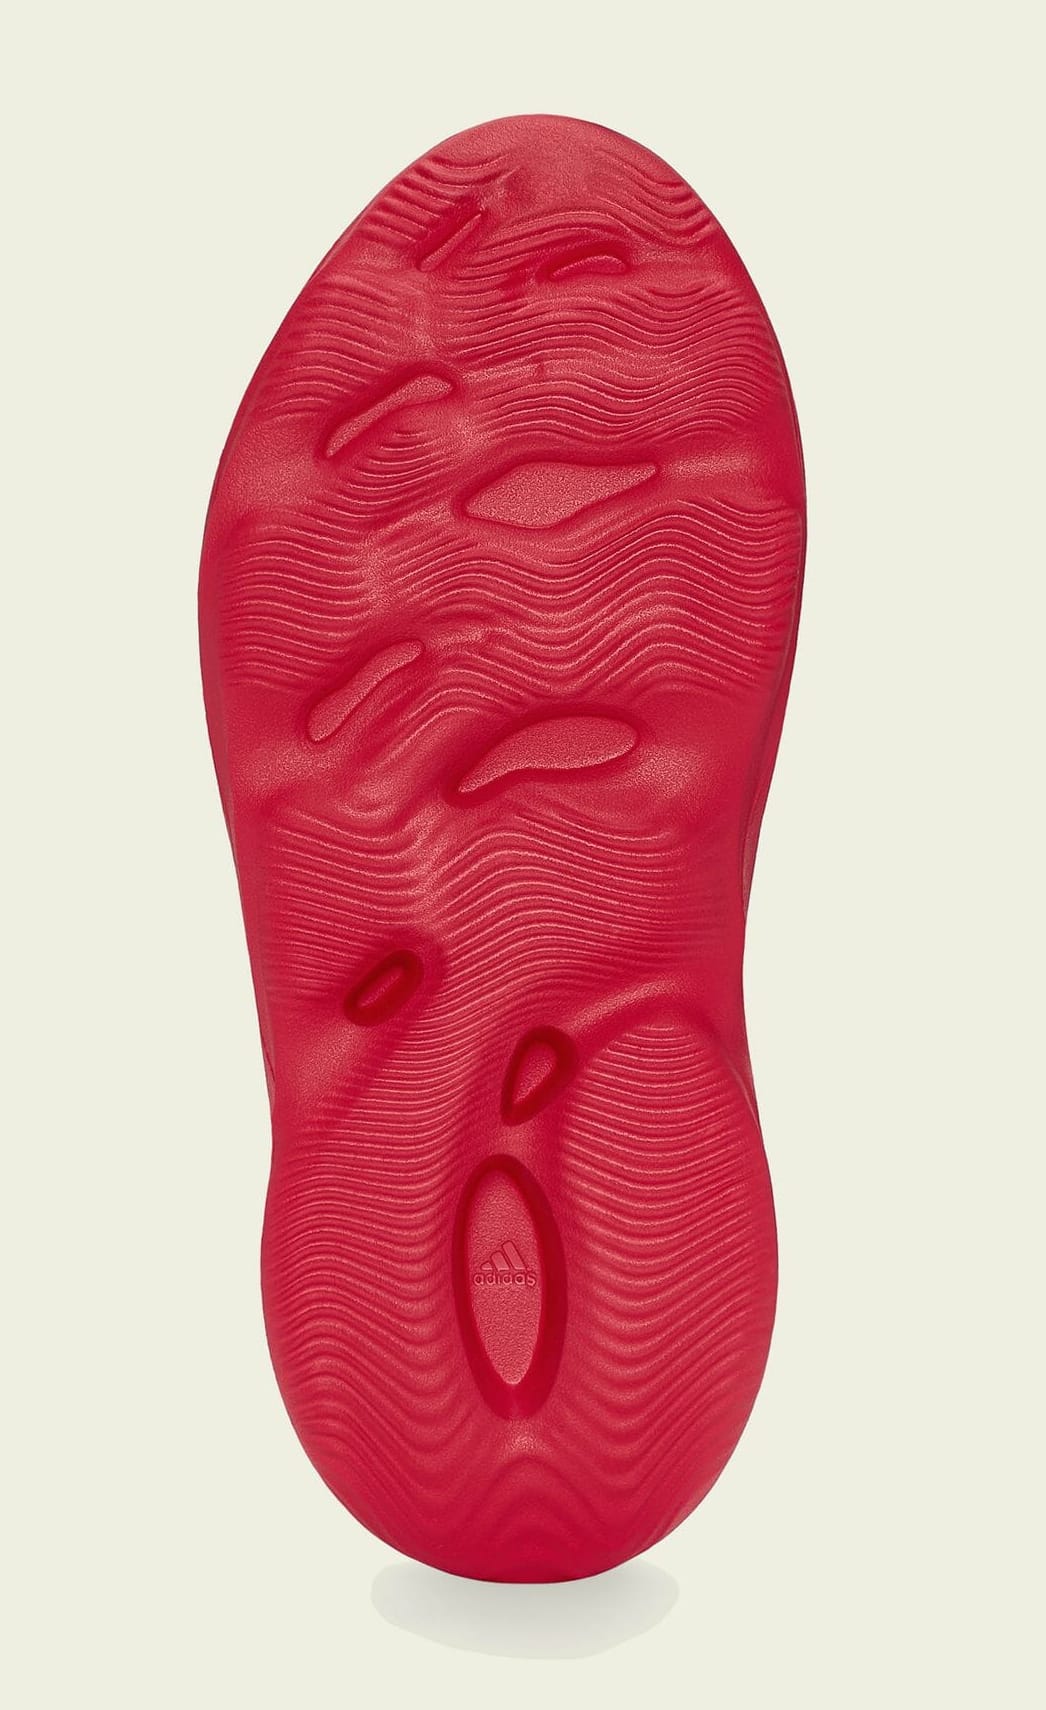 Adidas Yeezy Foam Runner 'Vermillion' GW3355 (Outsole)